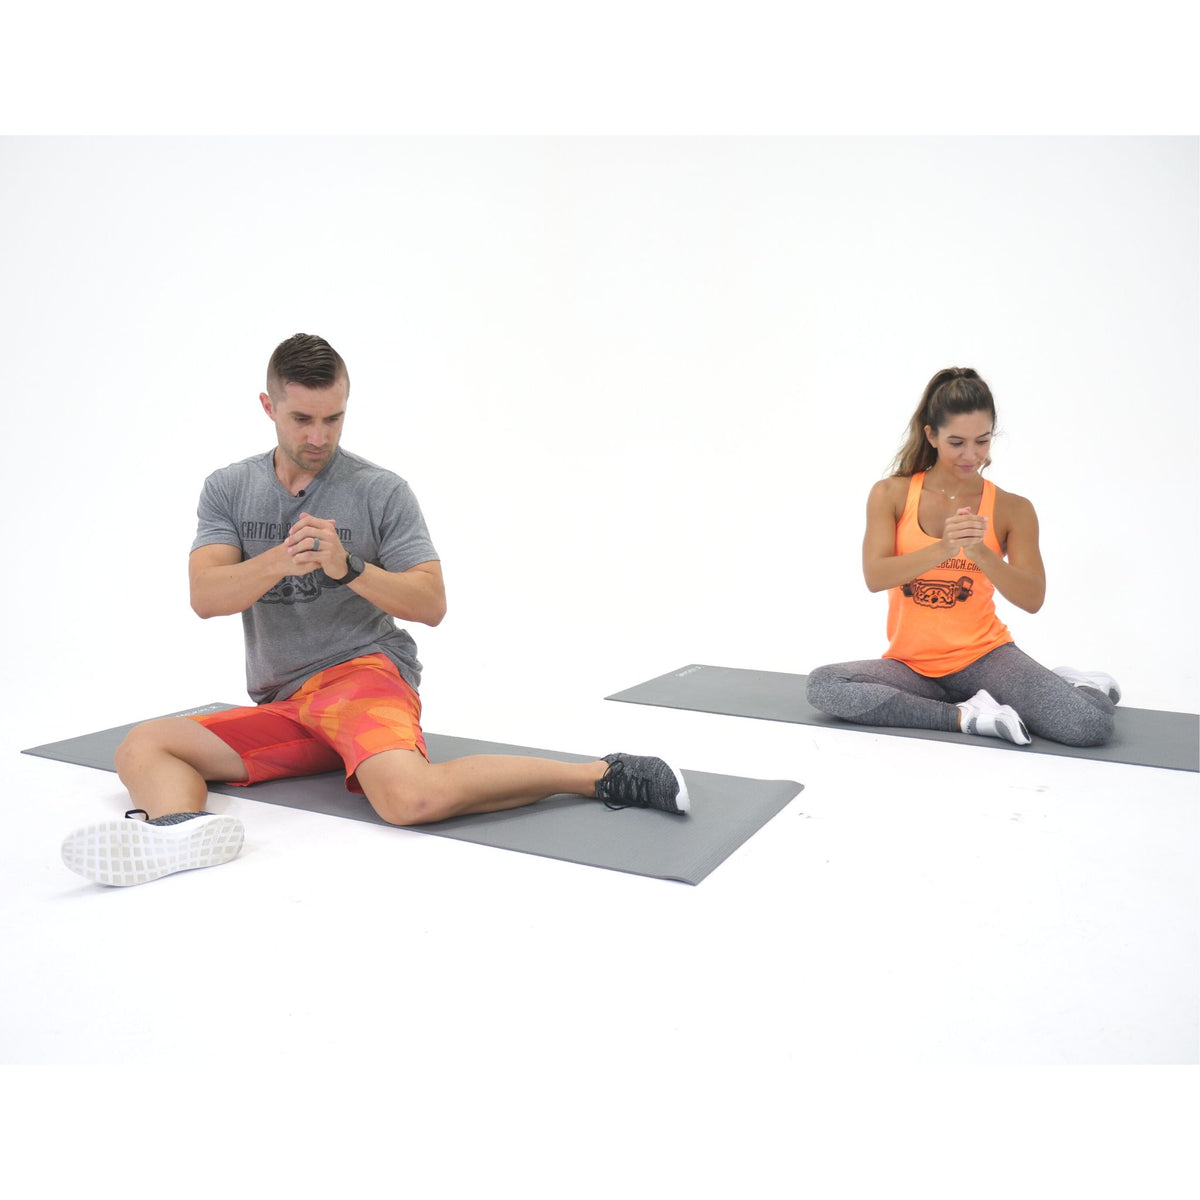 Metabolic Stretching - Digital/DVD